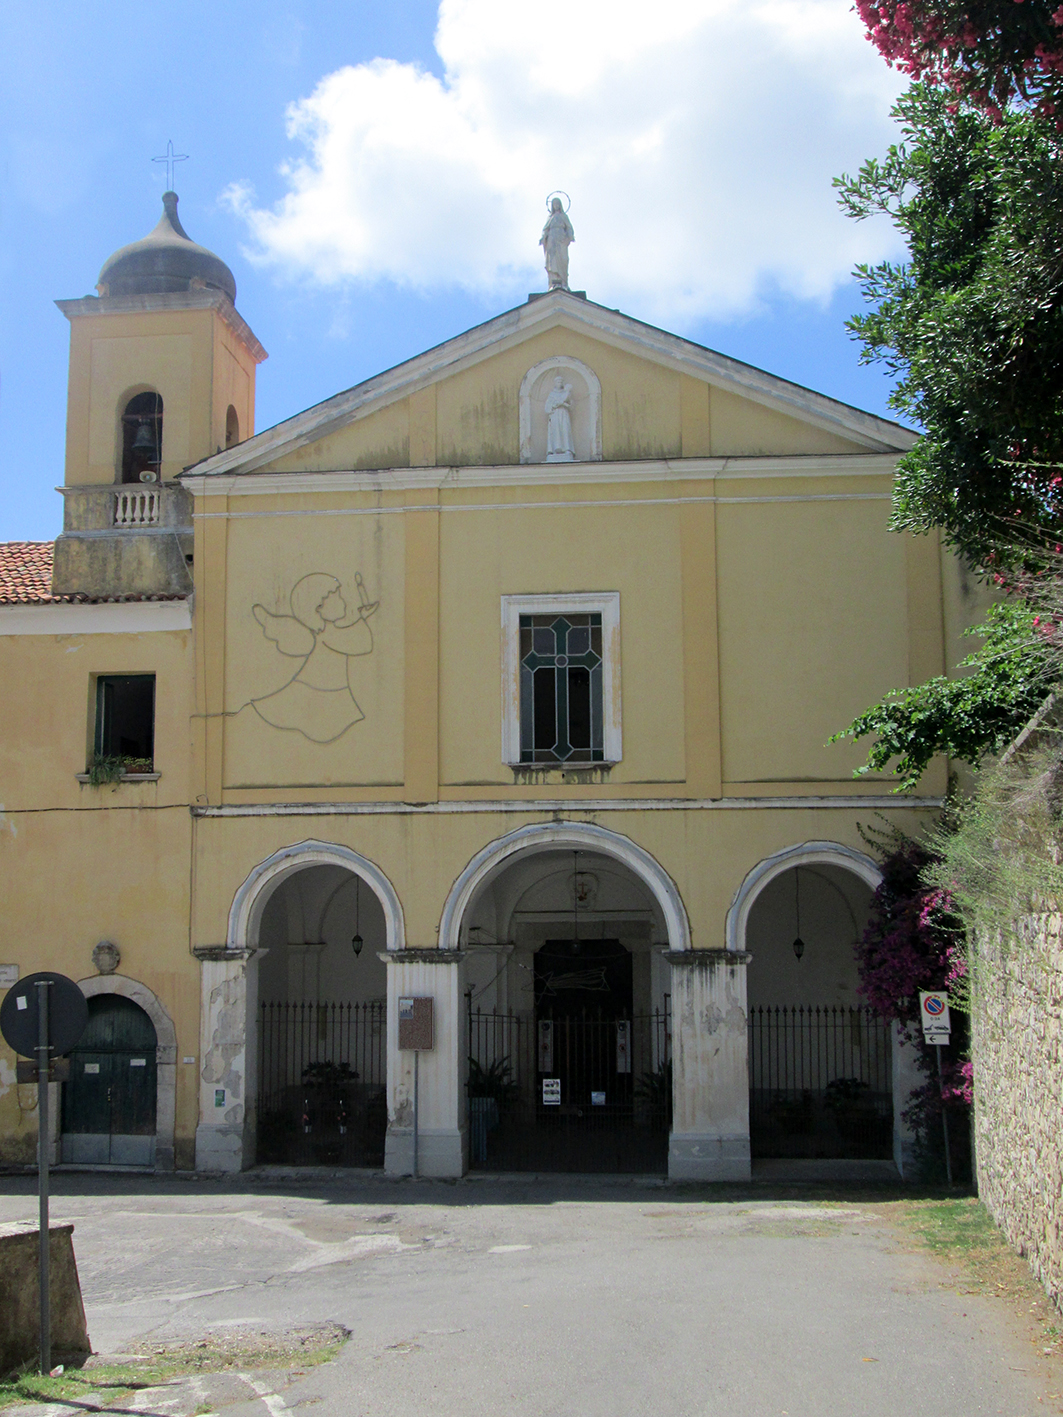 Chiesa di S. Antonio (chiesa, francescana) - Capaccio Paestum (SA) 